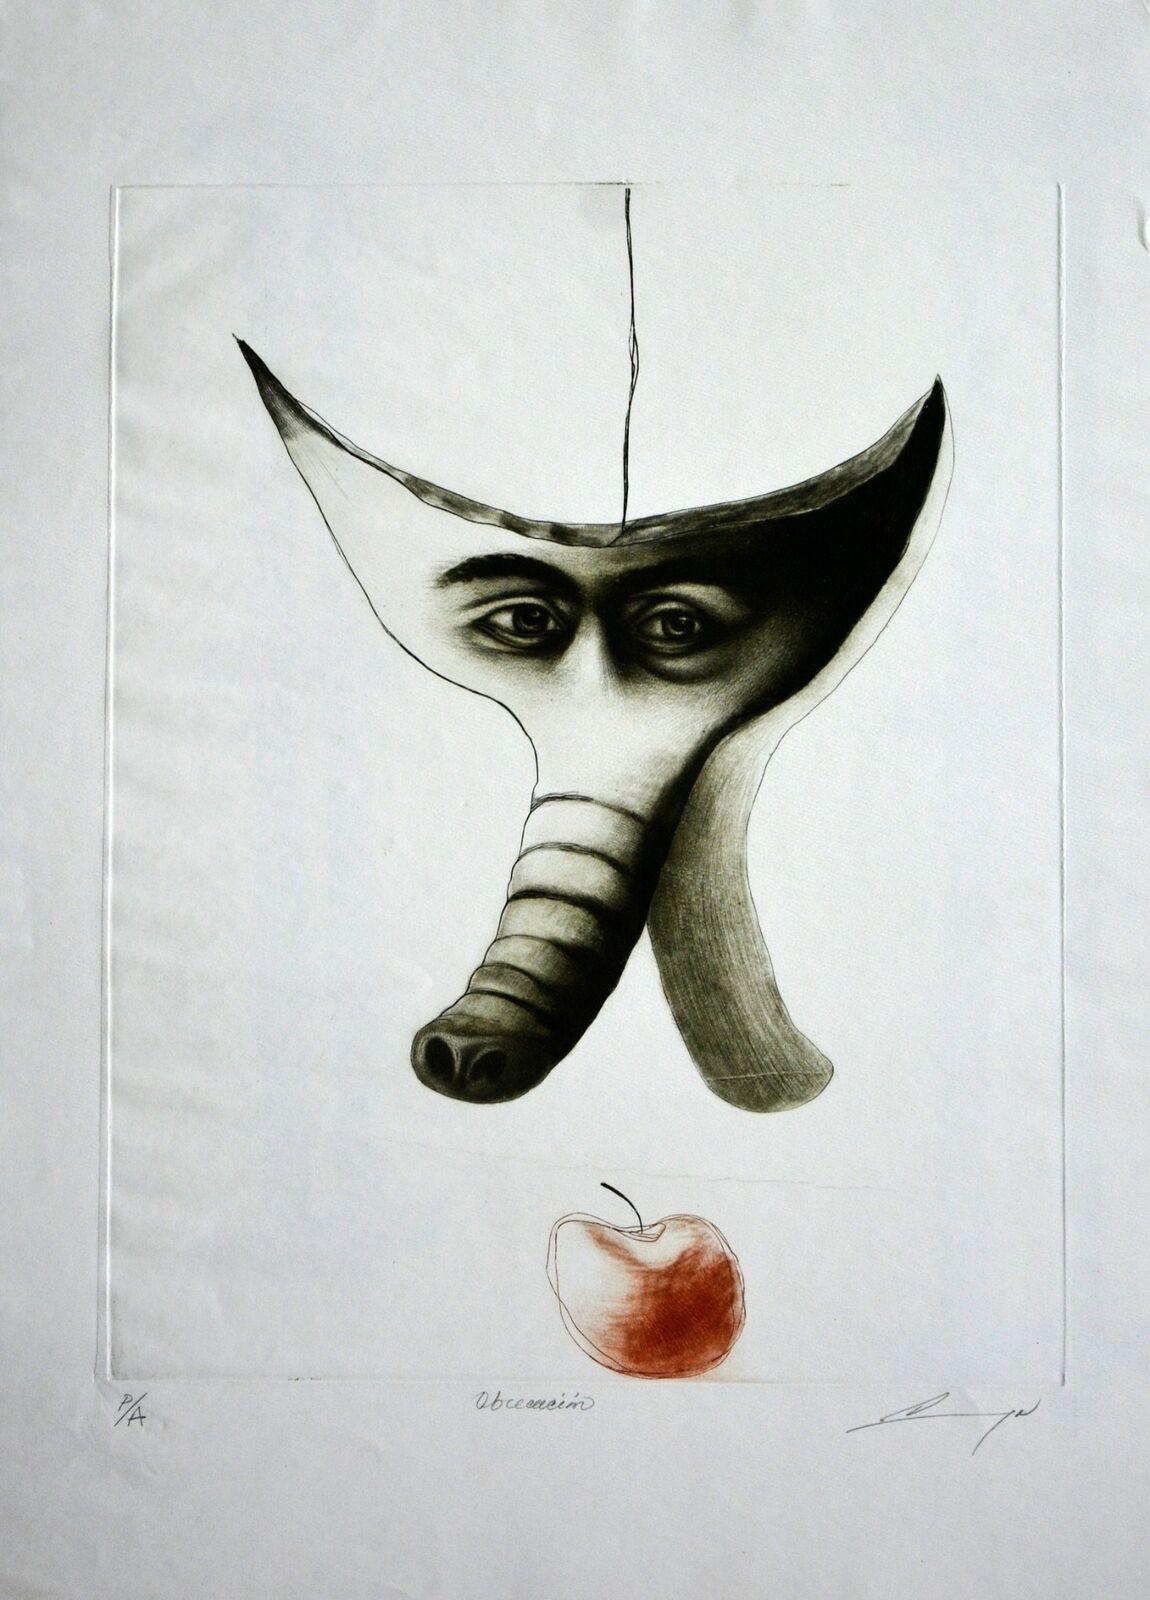 Luis Lara, ¨Obsecacion¨, 2000, Mezzotinto, 26x18,9 in